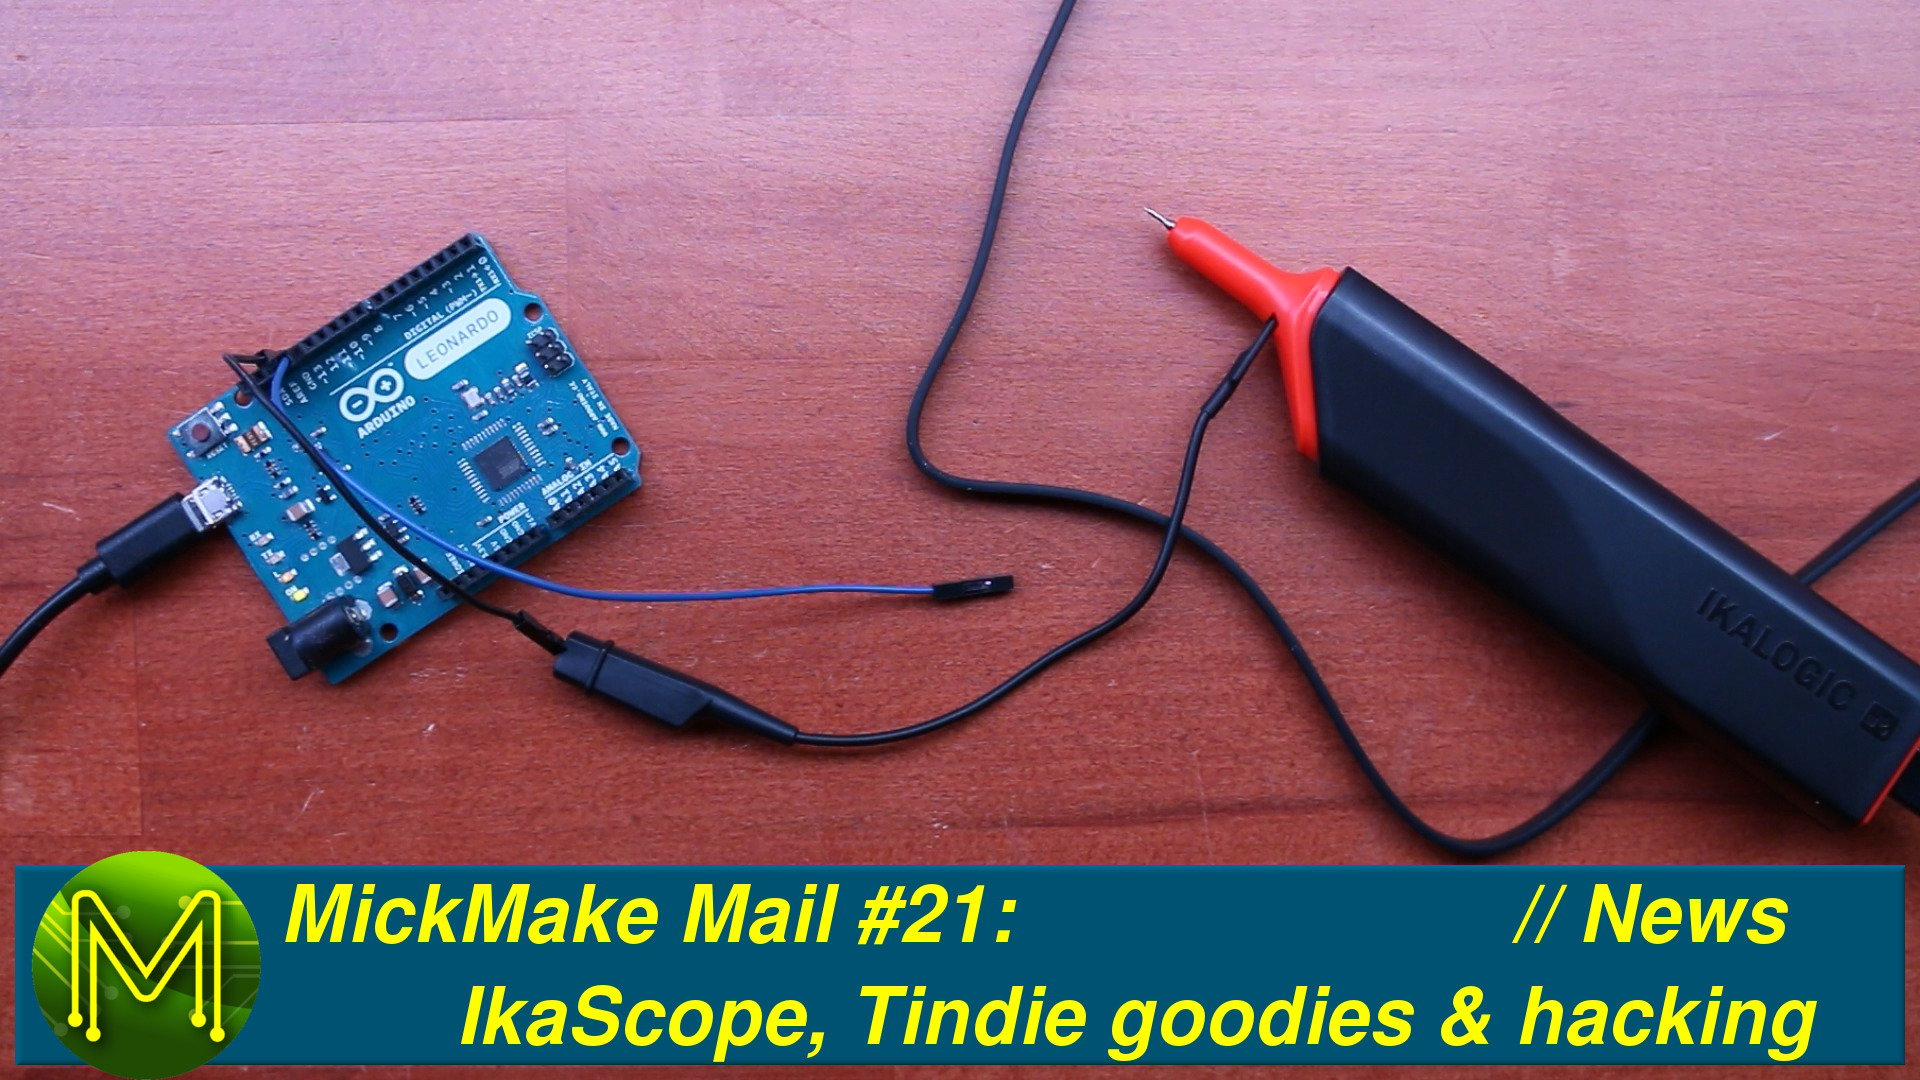 MickMake Mail #21: IkaScope, Tindie goodies & appliance hacking.